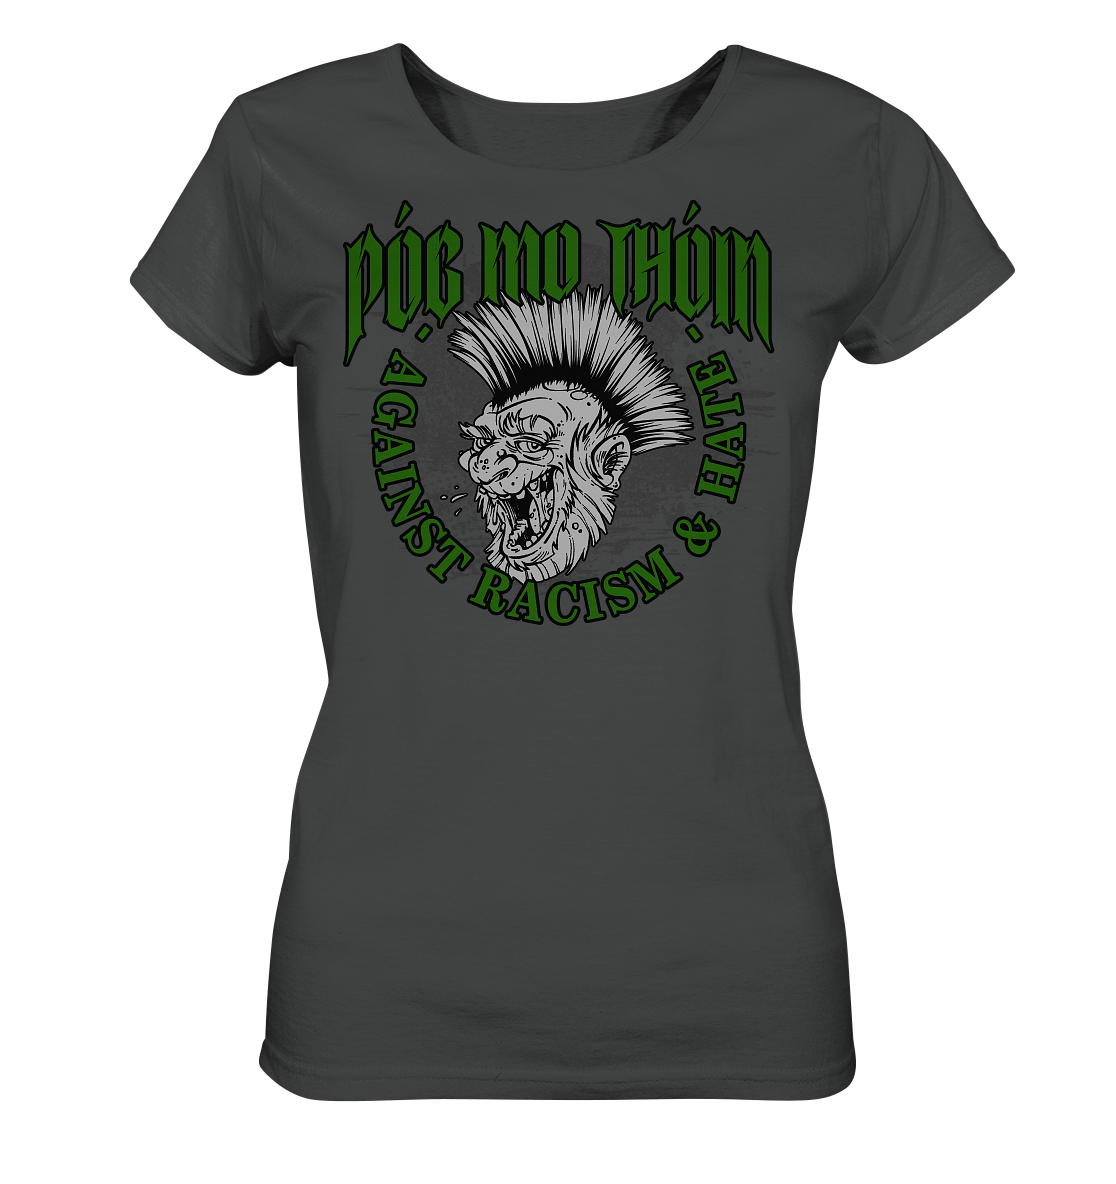 Póg Mo Thóin Streetwear "Against Racism & Hate" - Ladies Organic Shirt